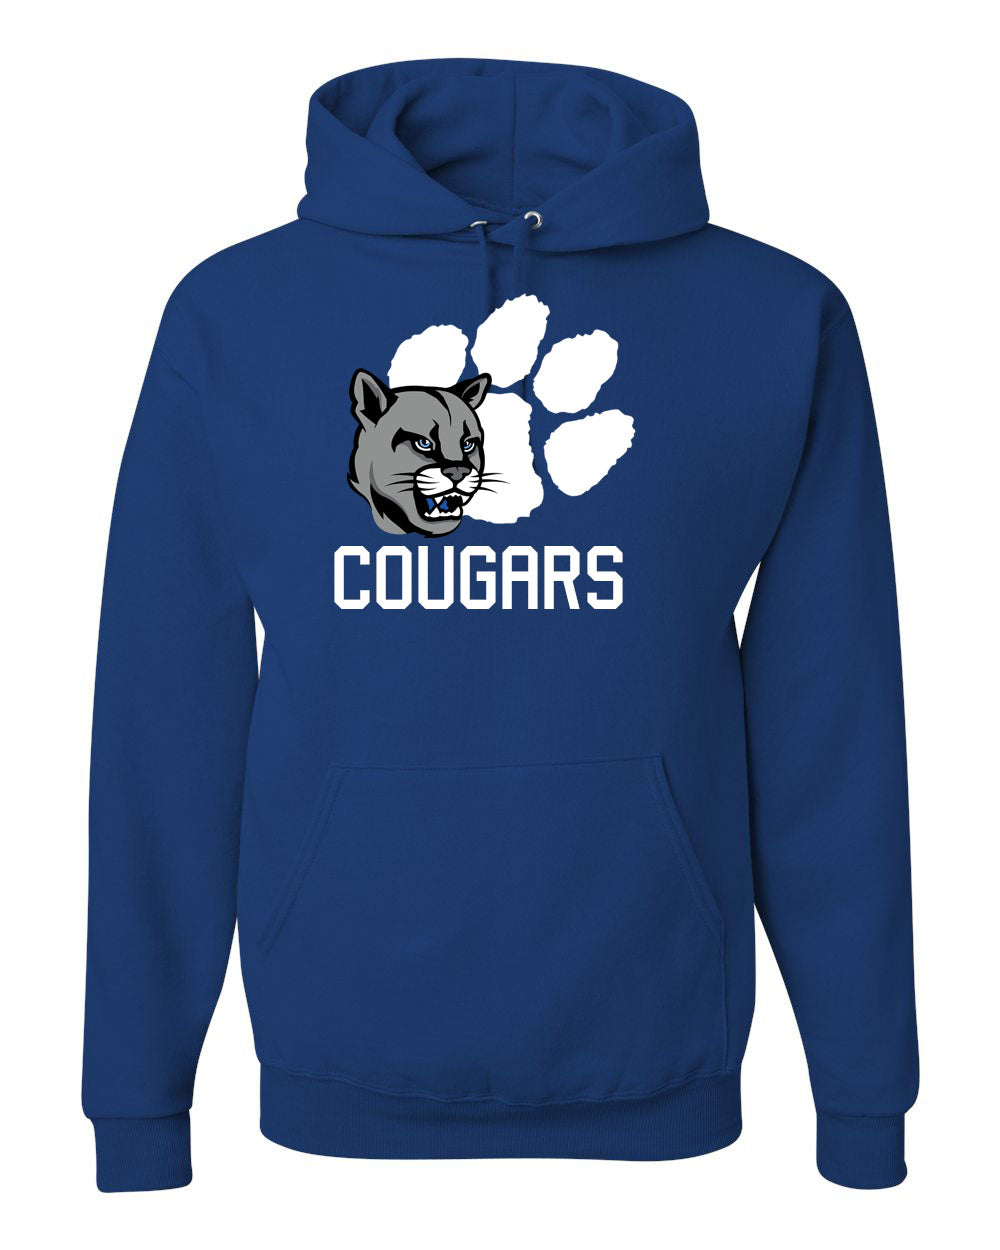 Cougars Paw Hooded Sweatshirt